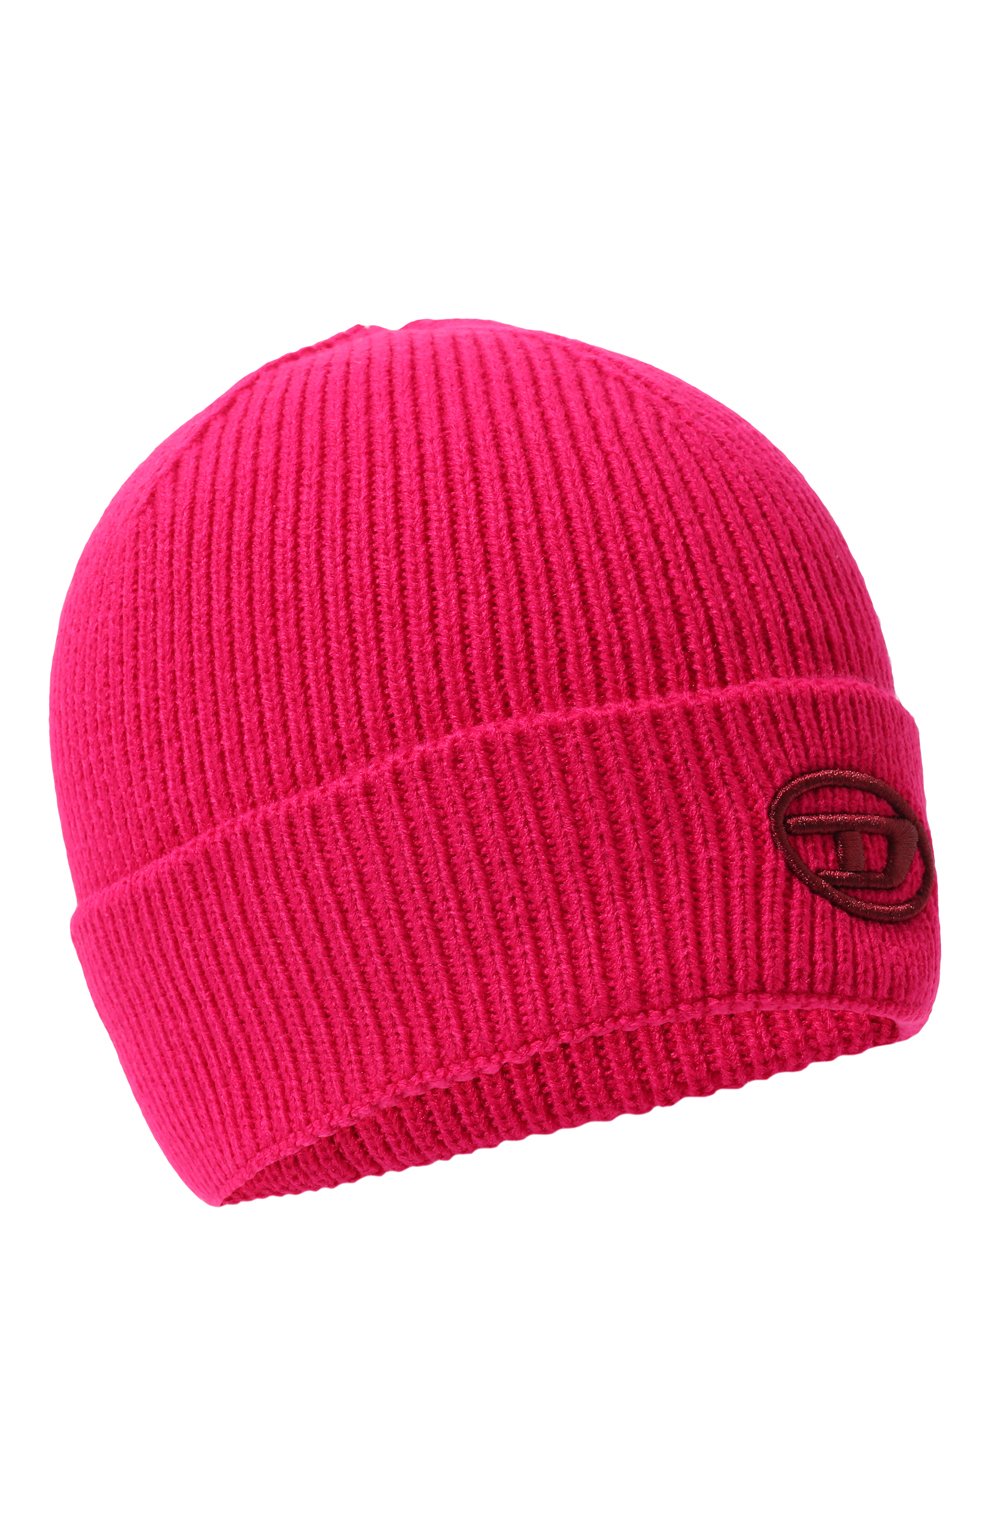 Детского шапка DIESEL розового цвета, арт. J00857-KYAQZ | Фото 1 (Материал: Текстиль, Синтетический материал)